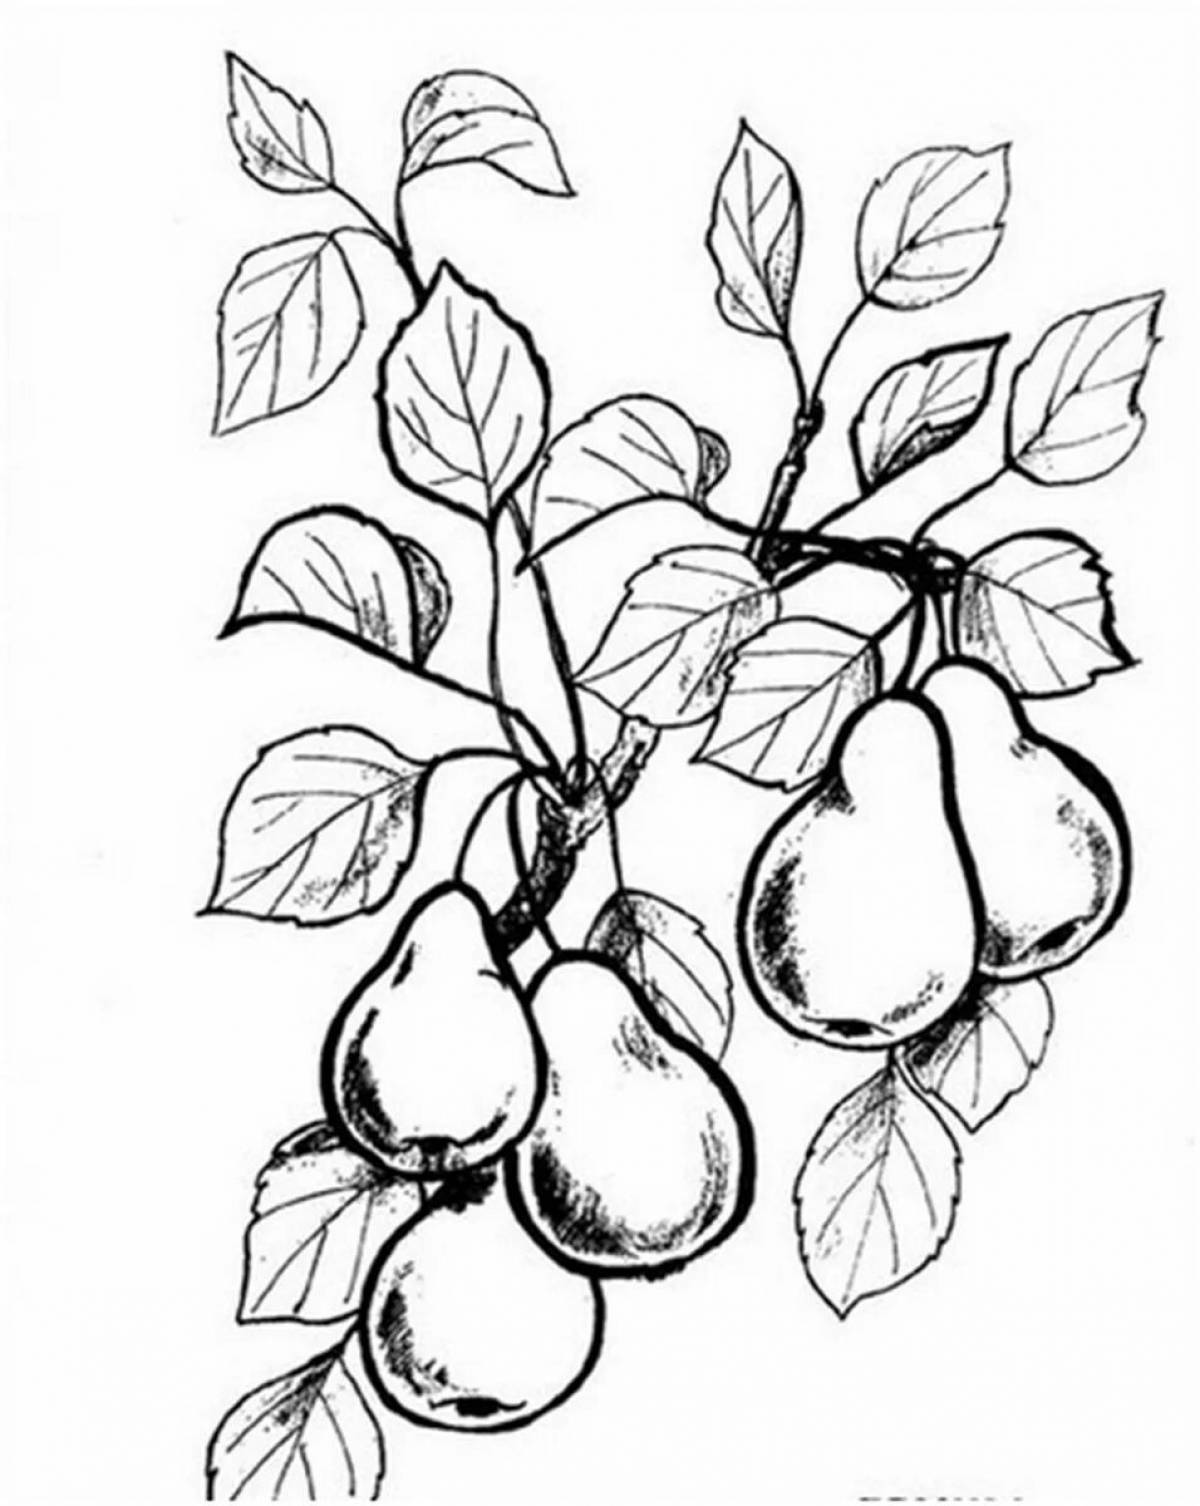 Pear tree #6